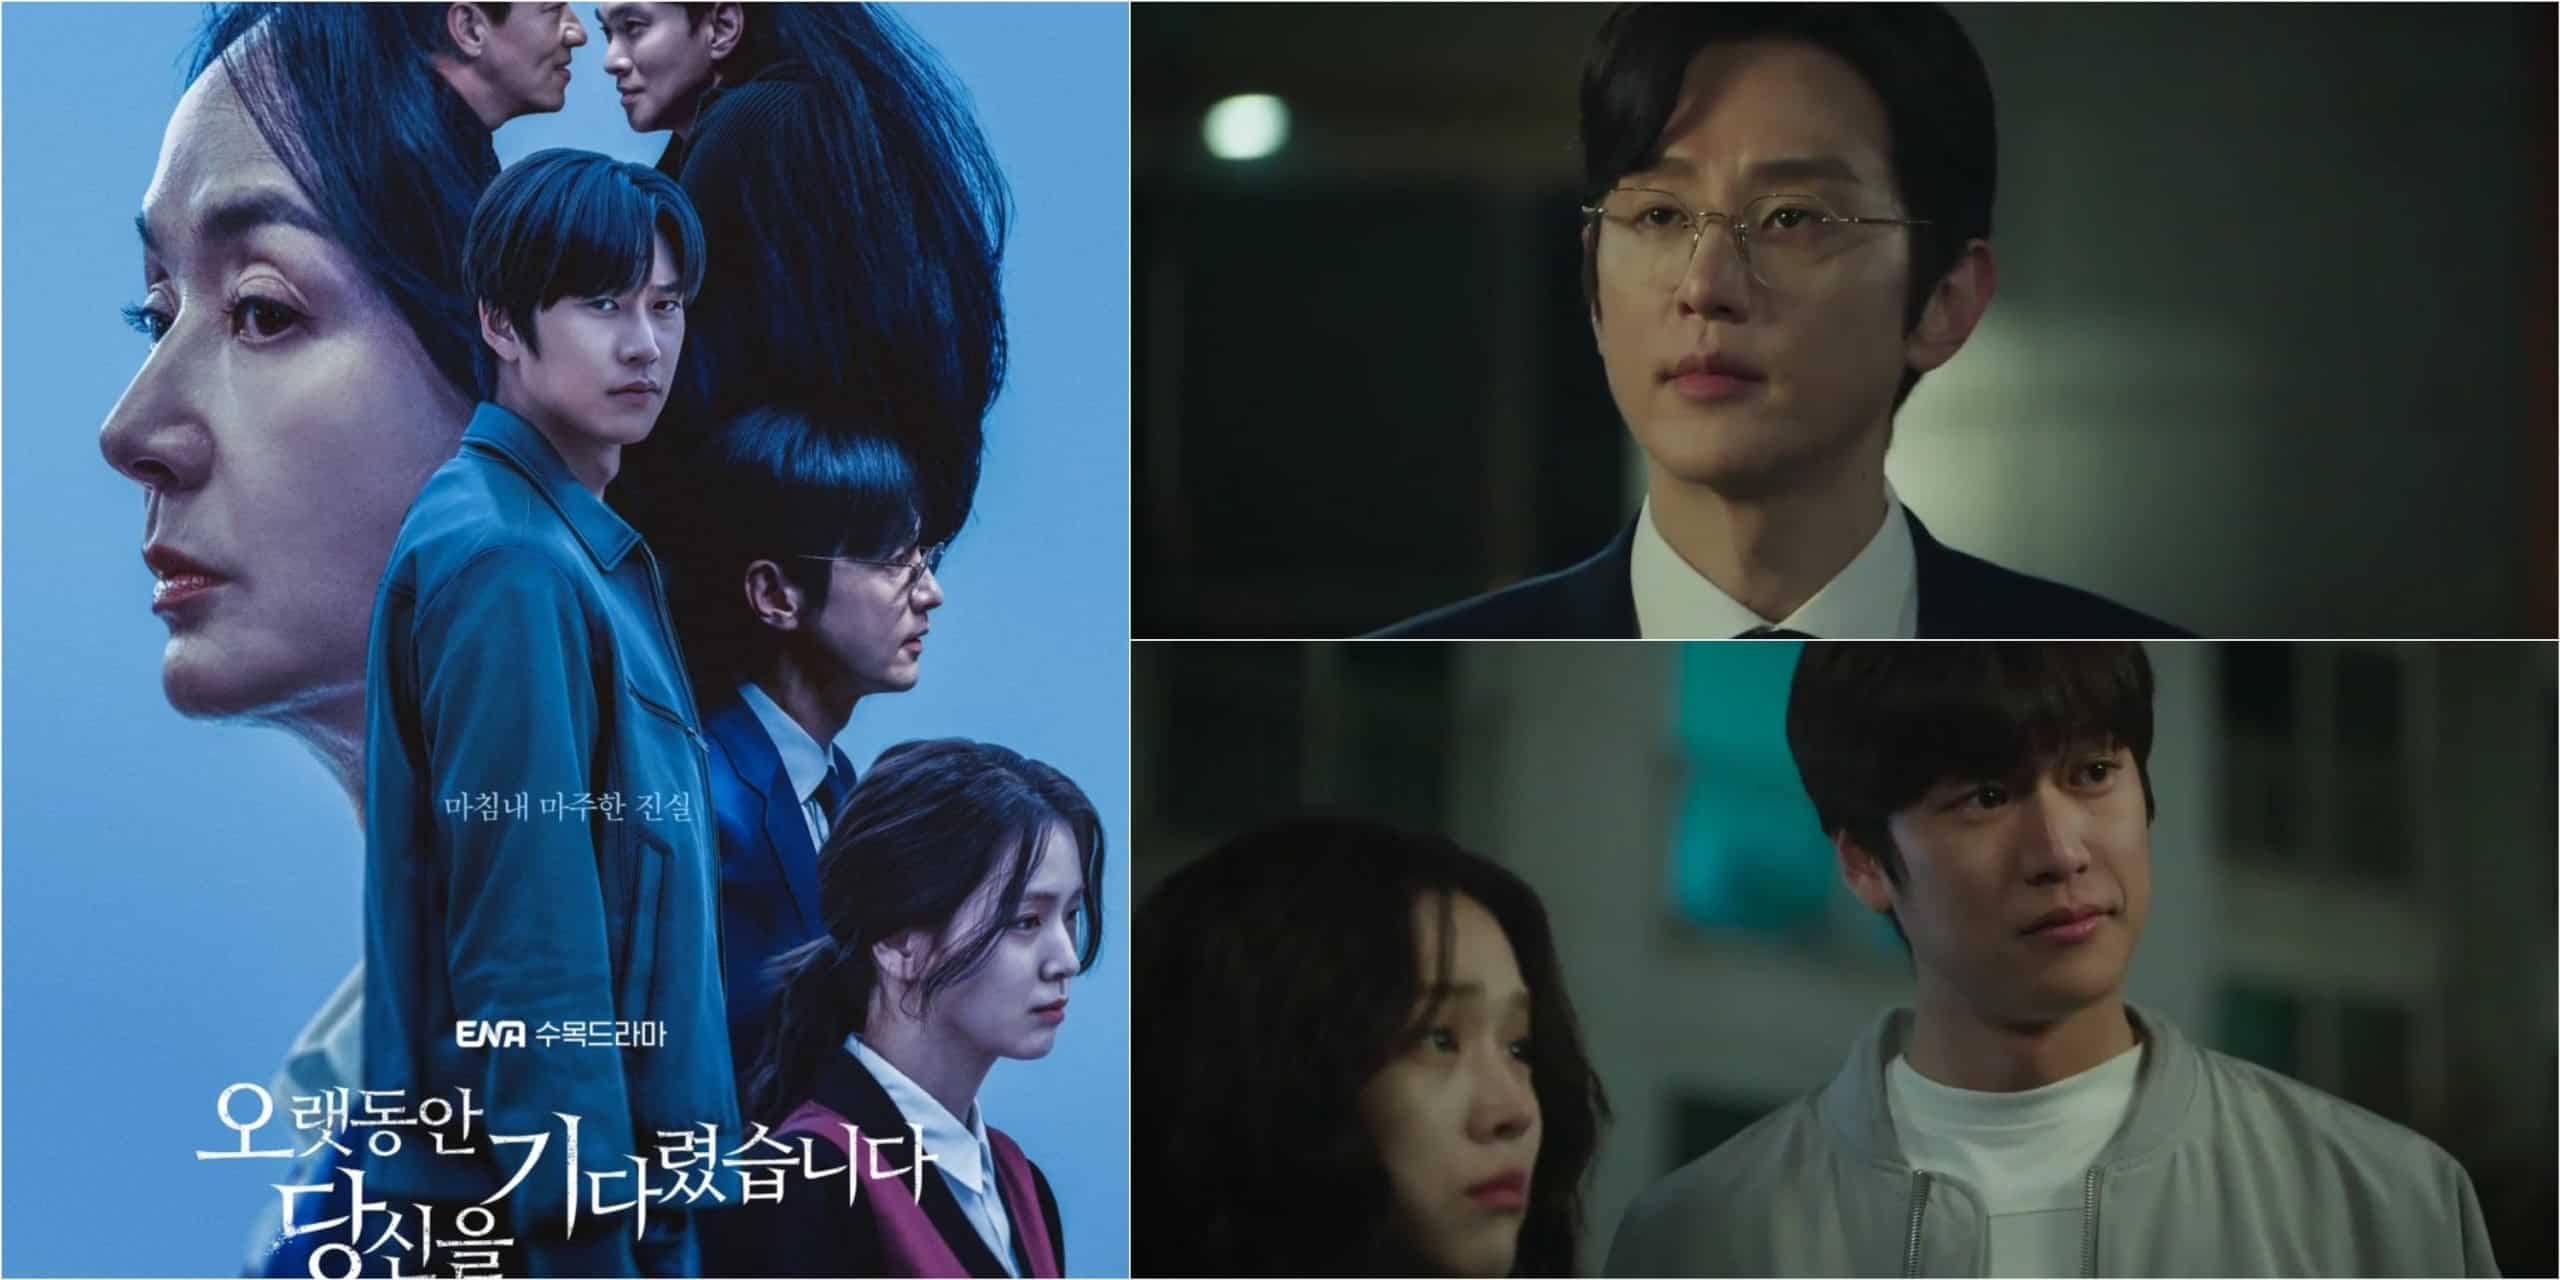 Korean Thriller Drama Longing For You Episode 3 Release Date